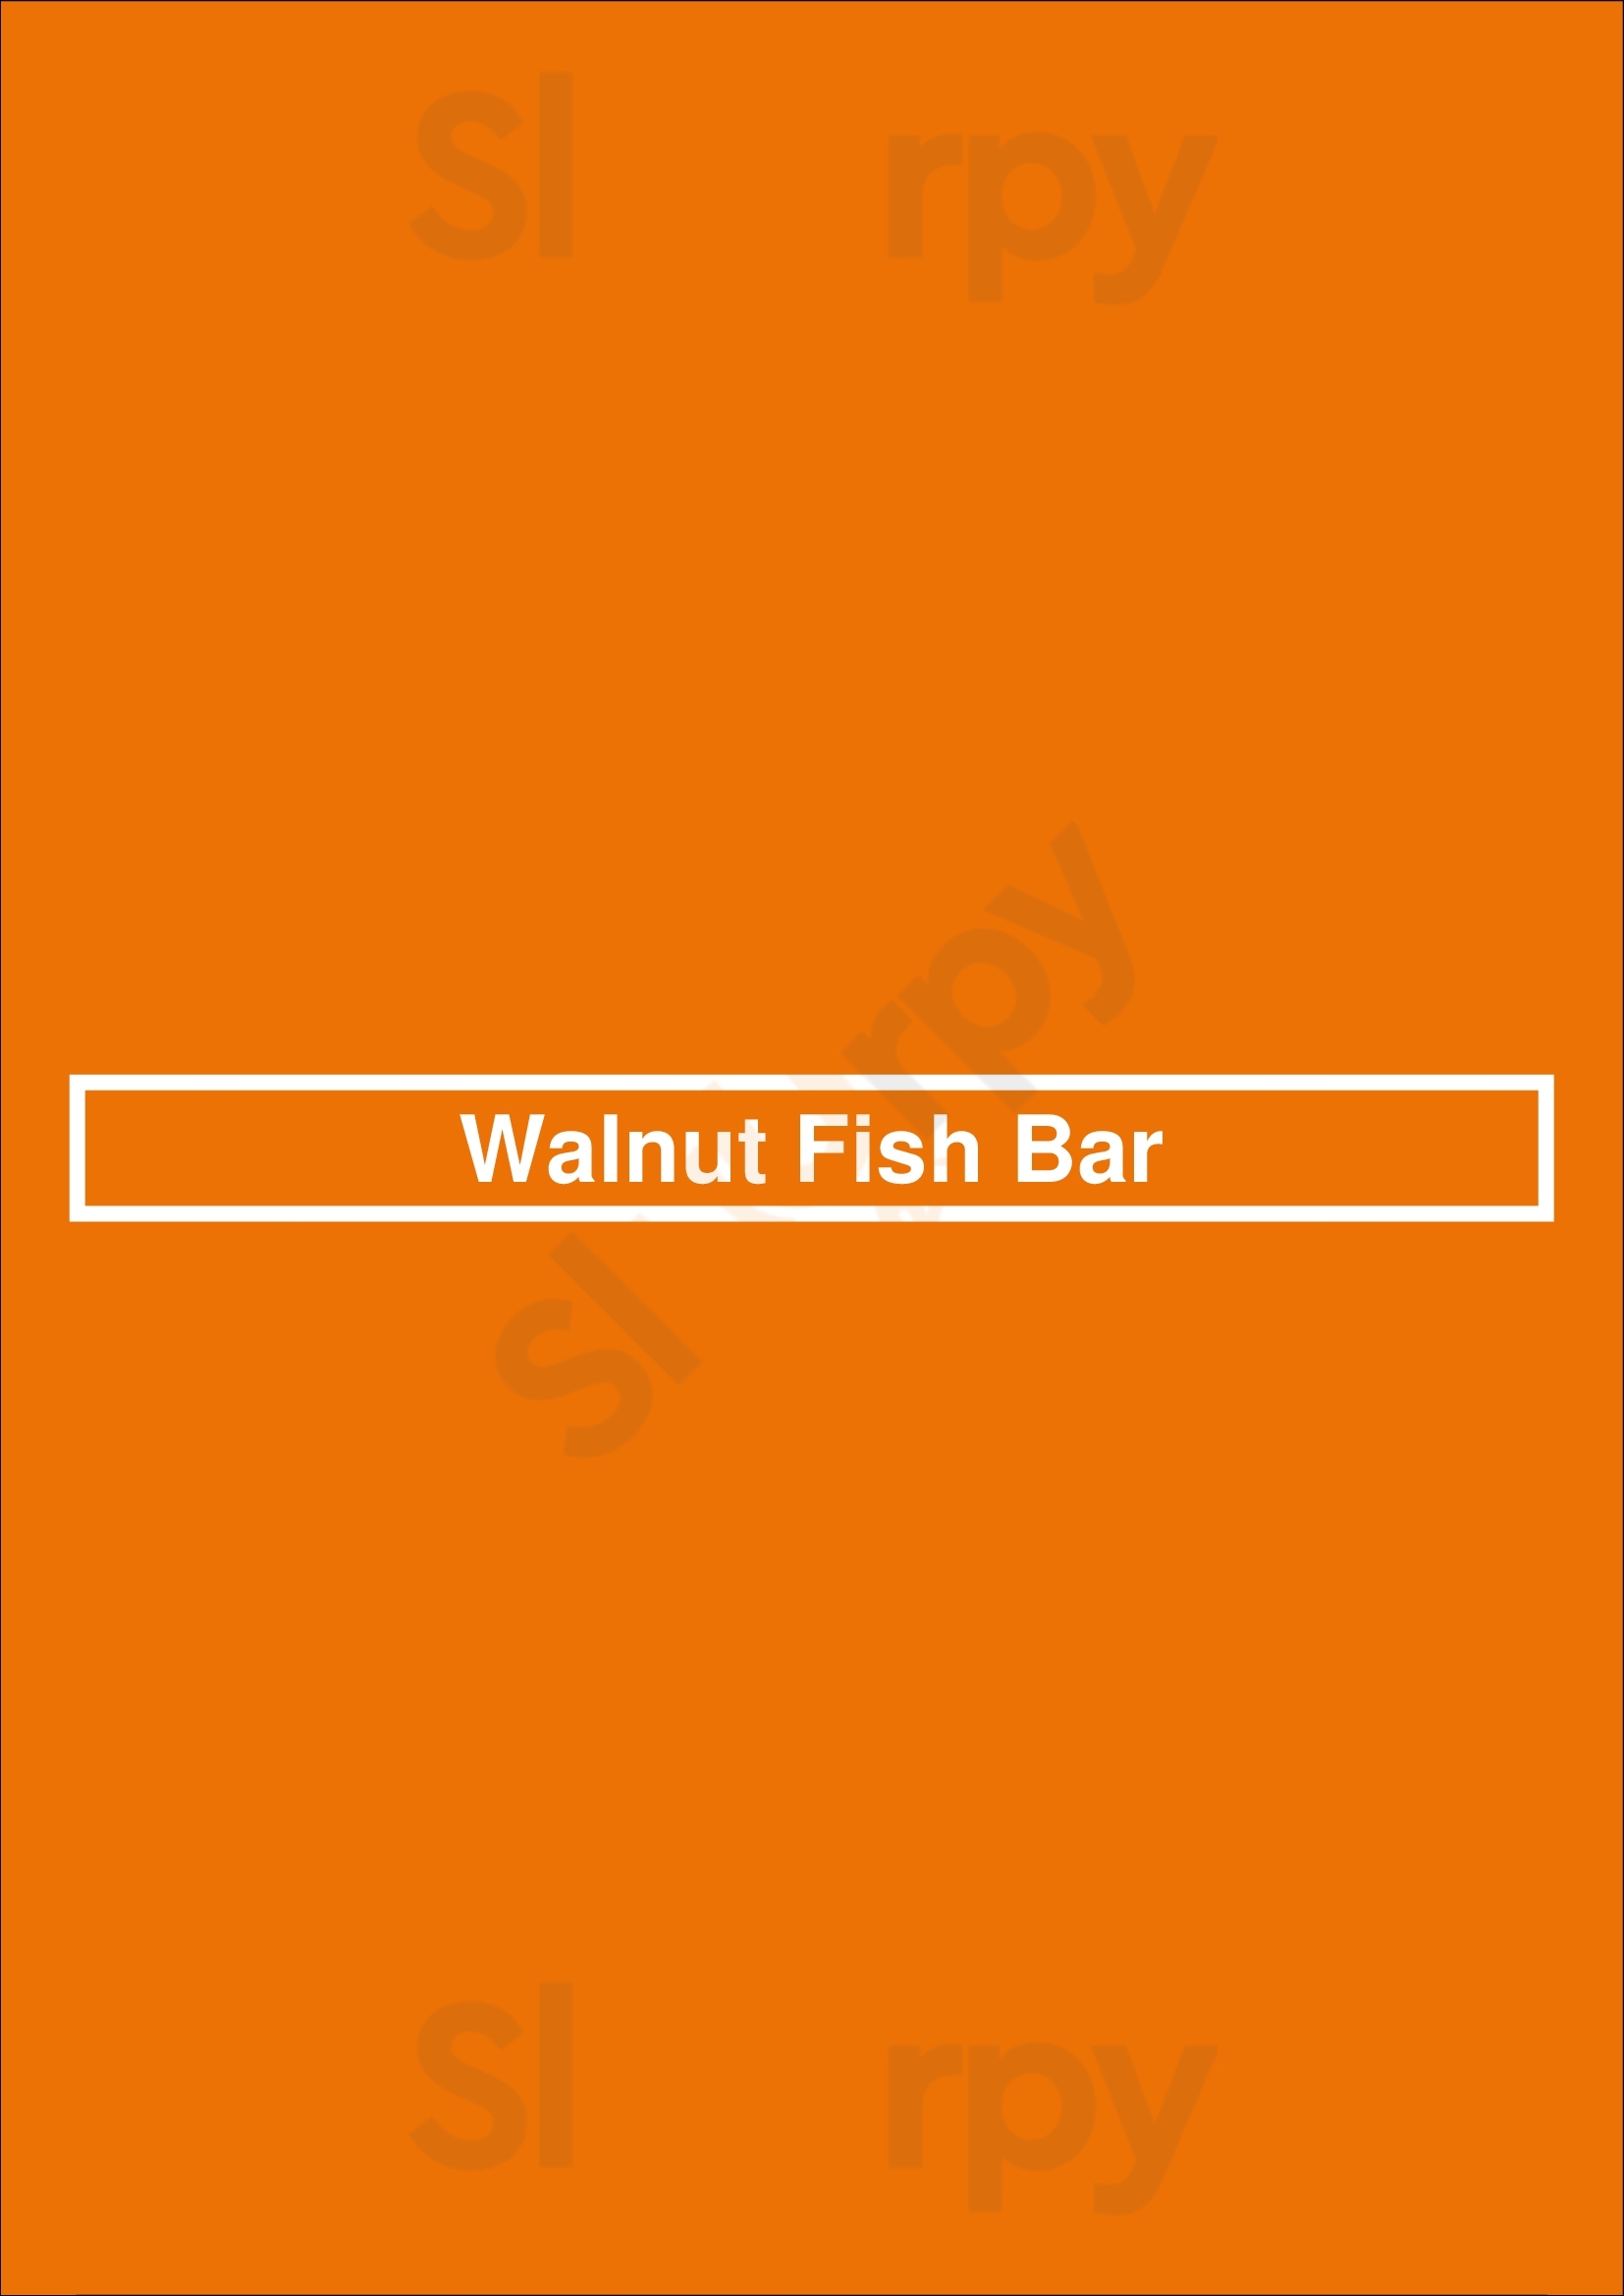 Walnut Fish Bar Leicester Menu - 1